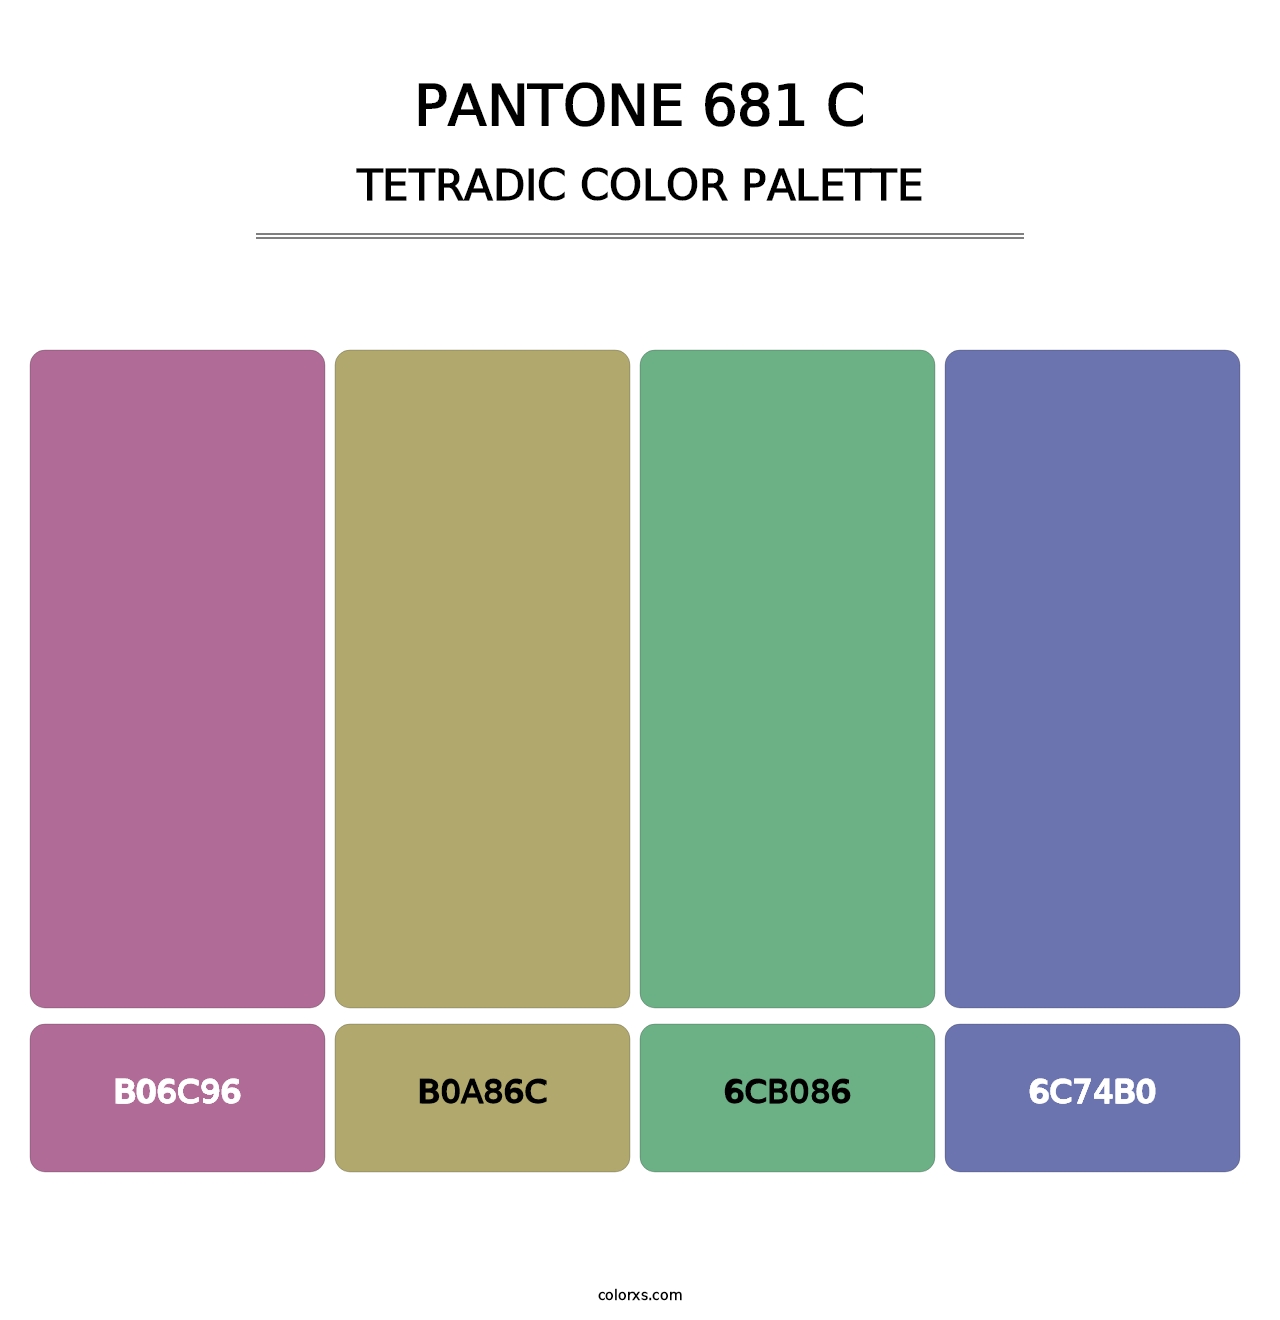 PANTONE 681 C - Tetradic Color Palette